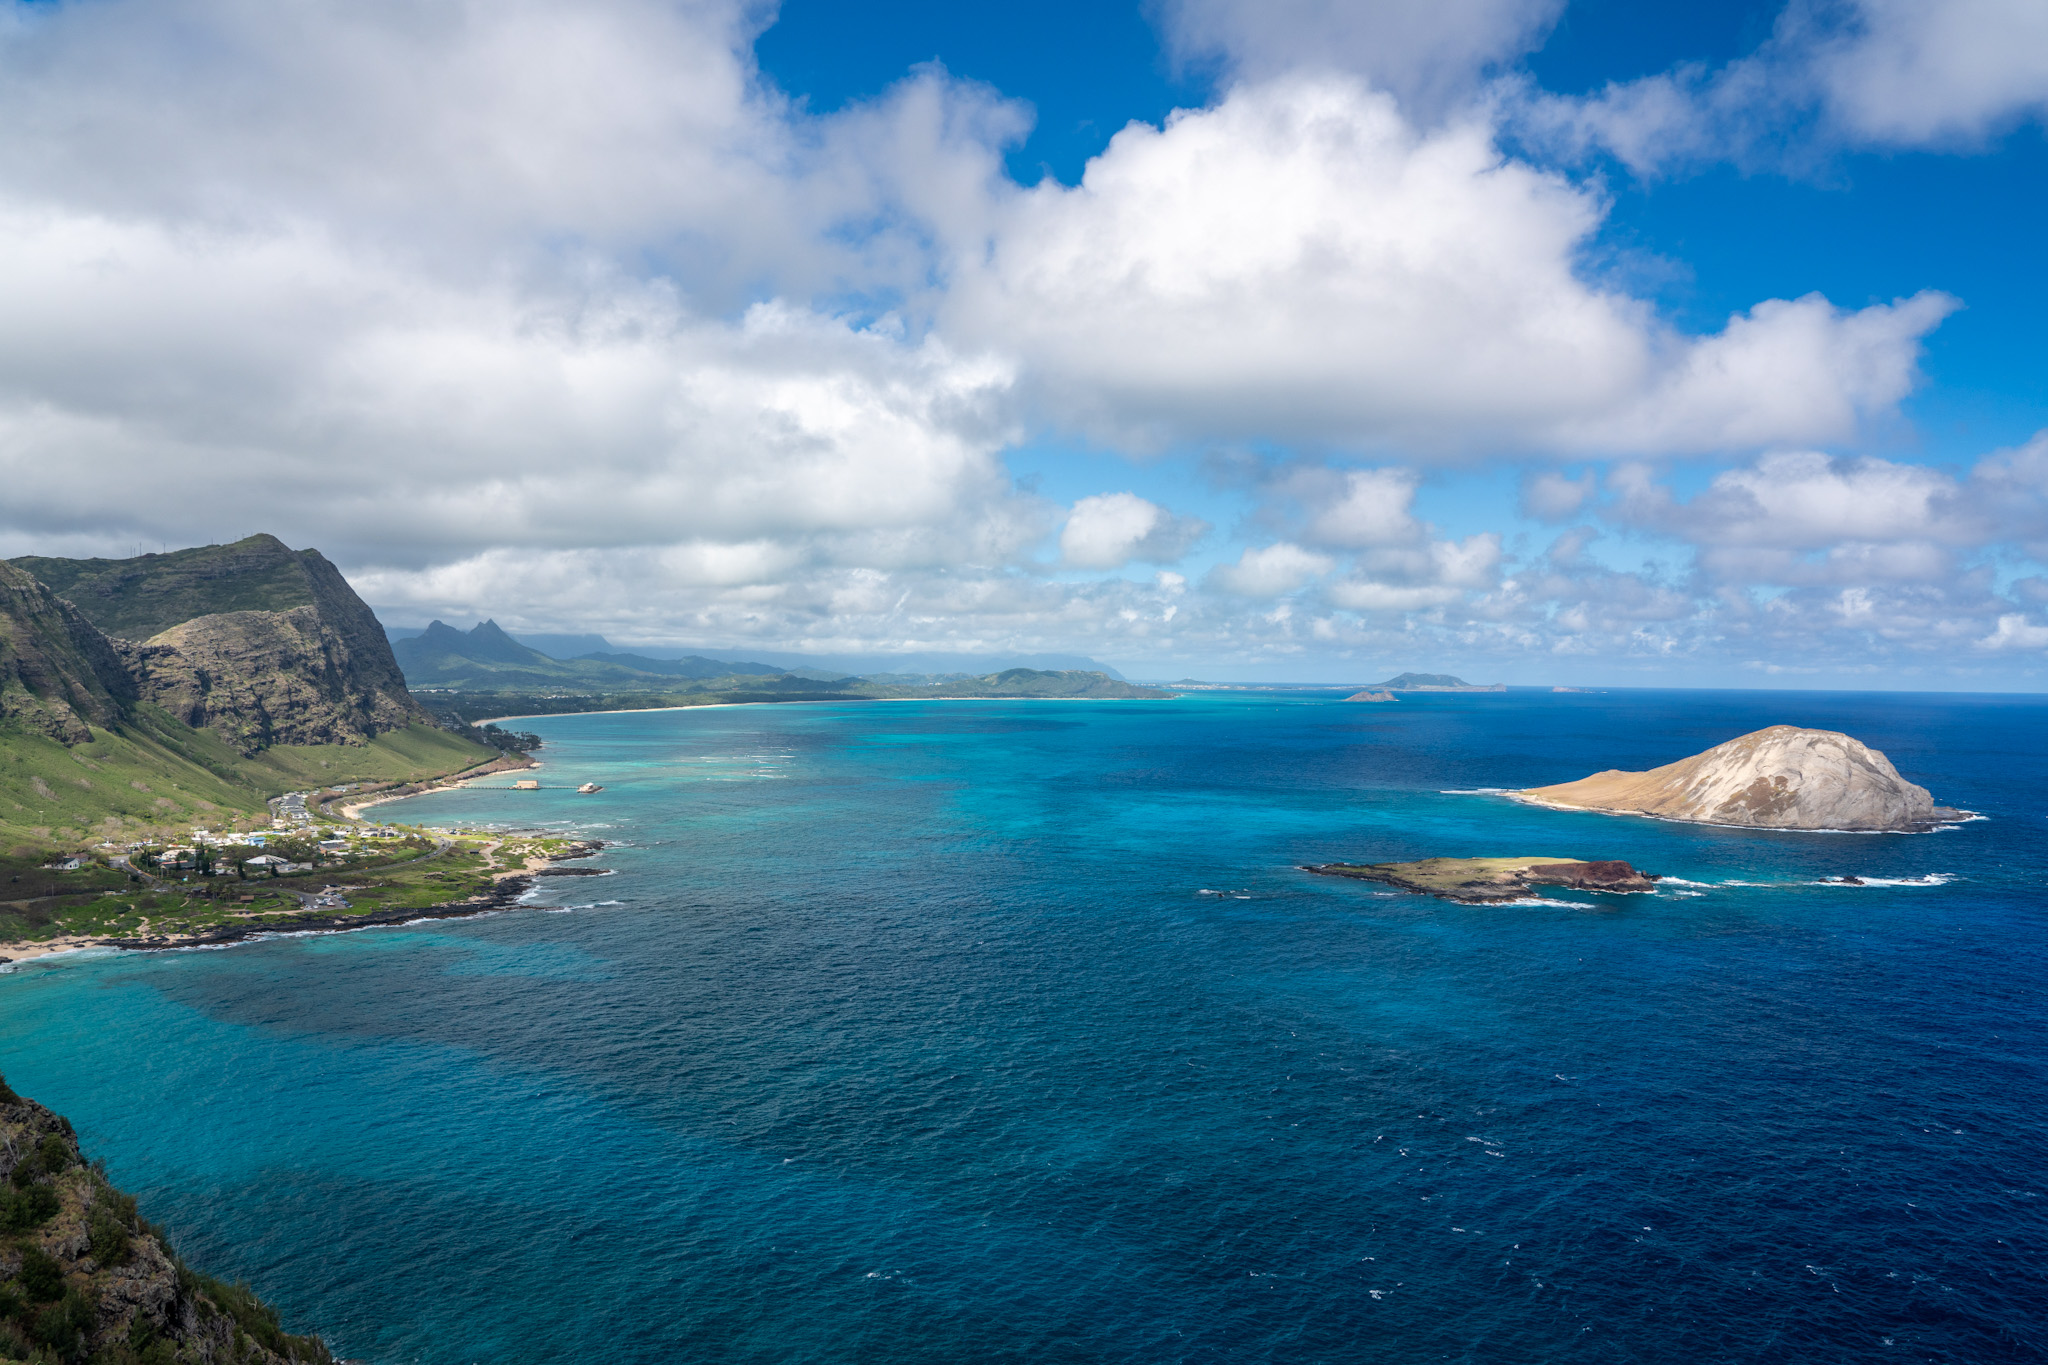 Panorama across the East coastline of Oahu over Makapu'u beach with Rabbit and Kaohikaipu islands from lighthouse